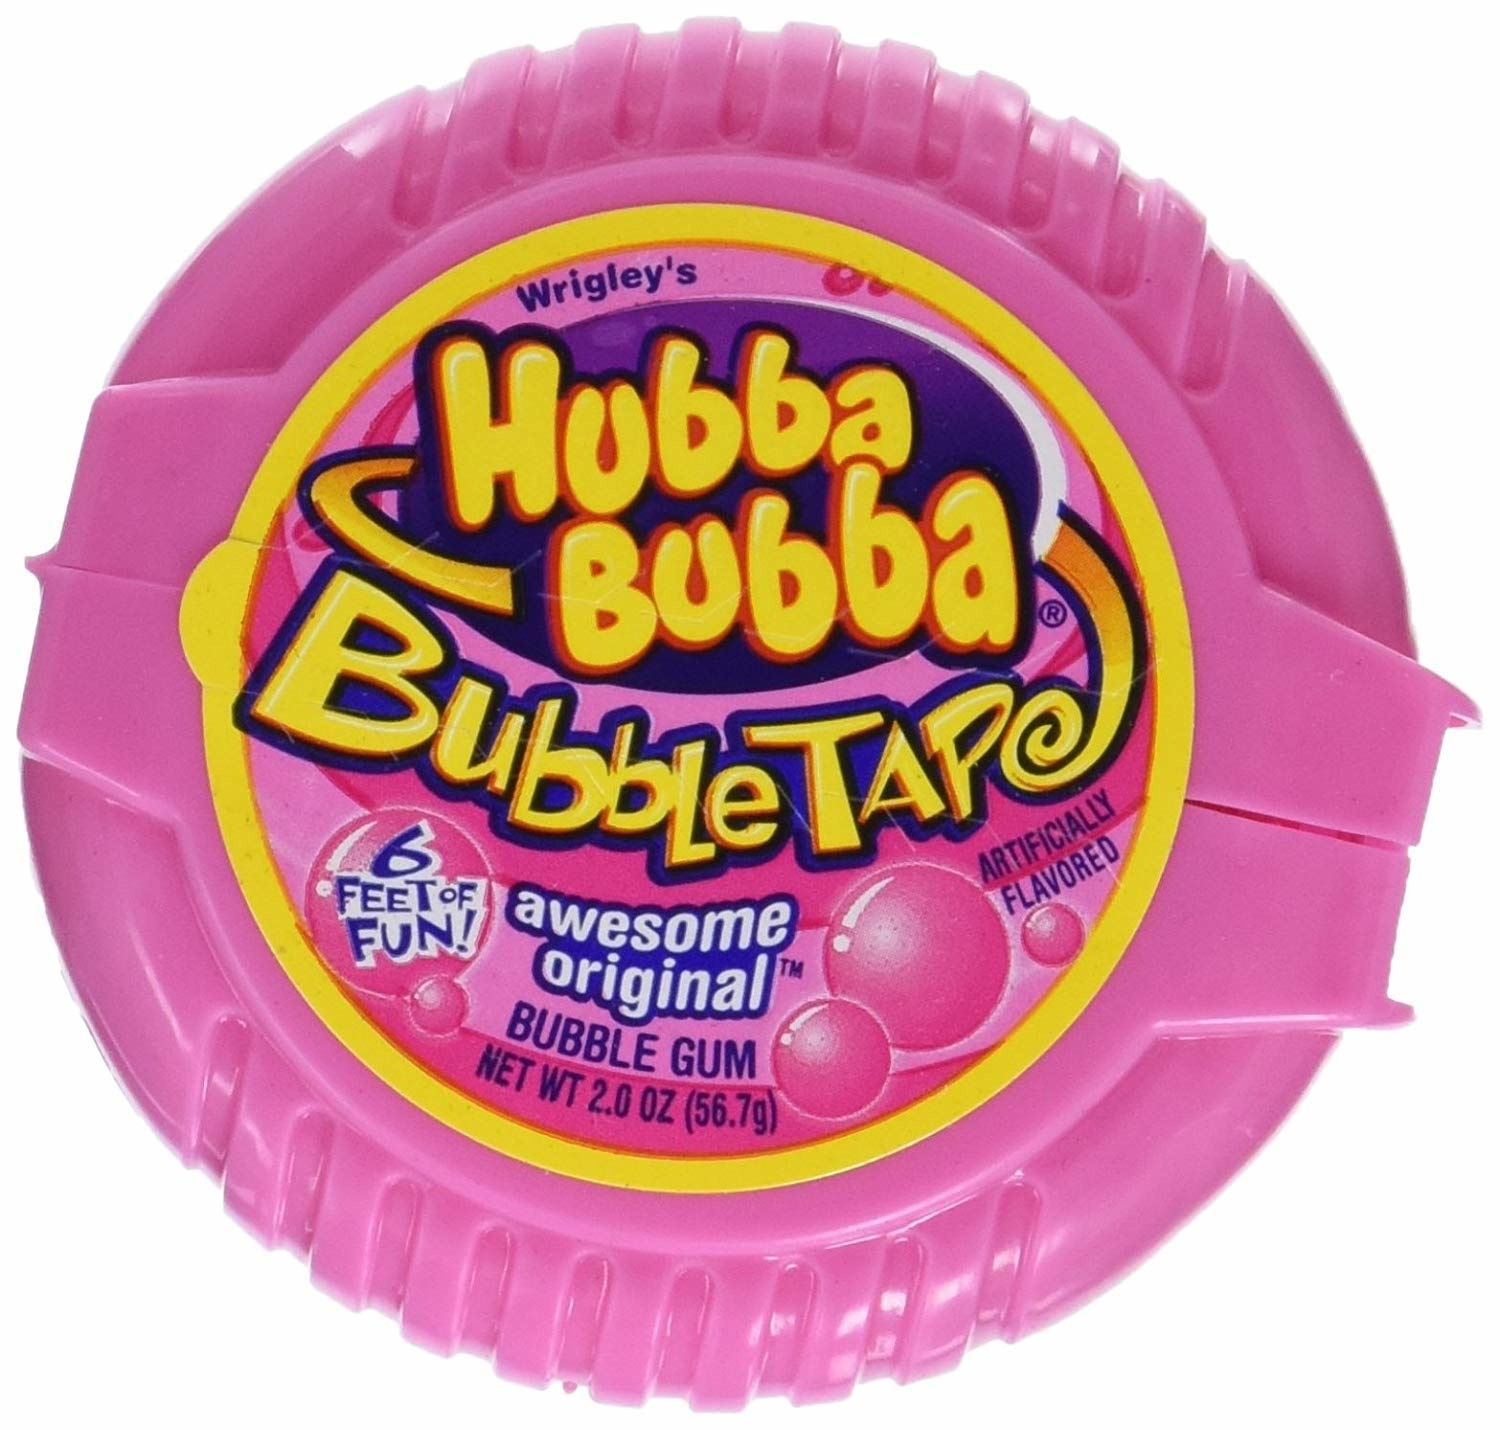 Christmas Hubba Bubba Bubble Tape 2 oz